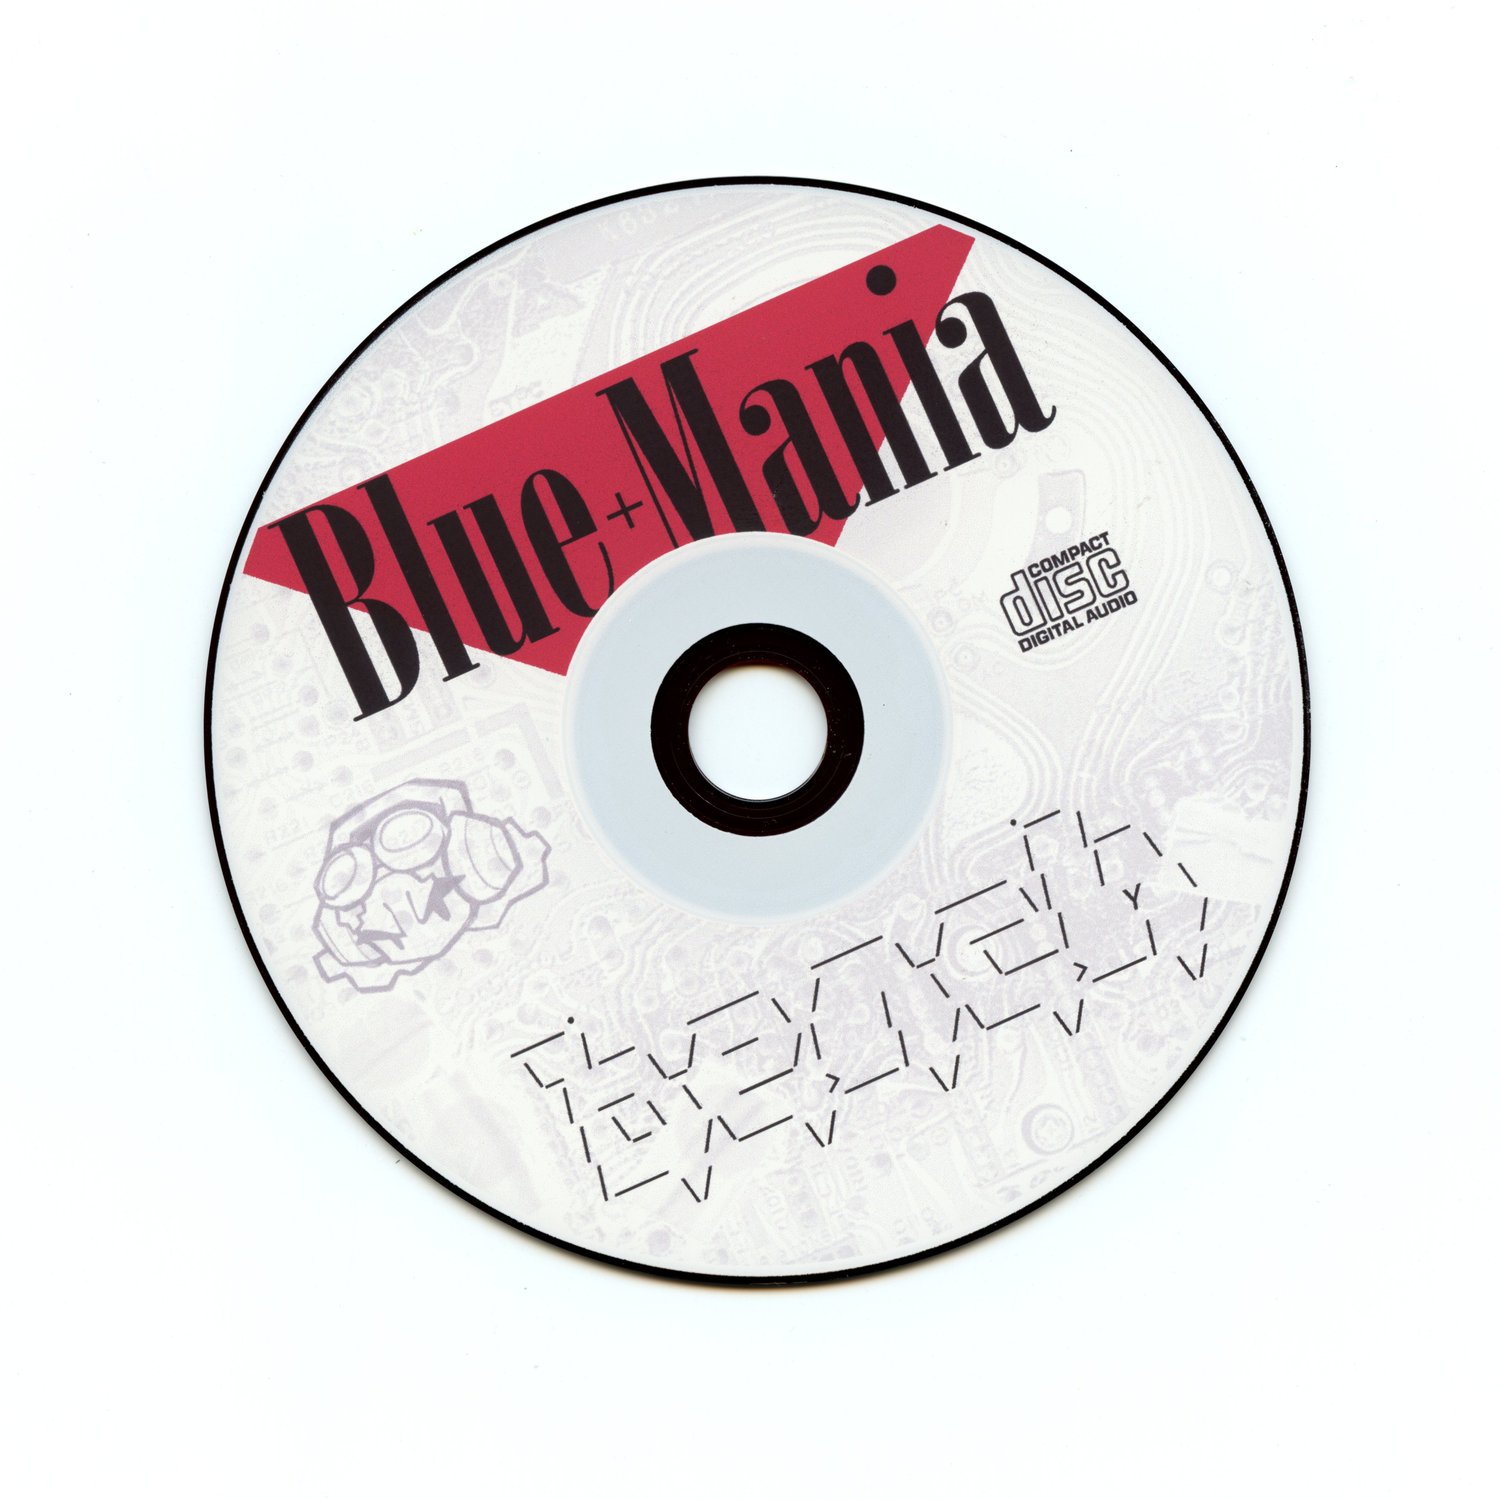 Blue + Mania CD